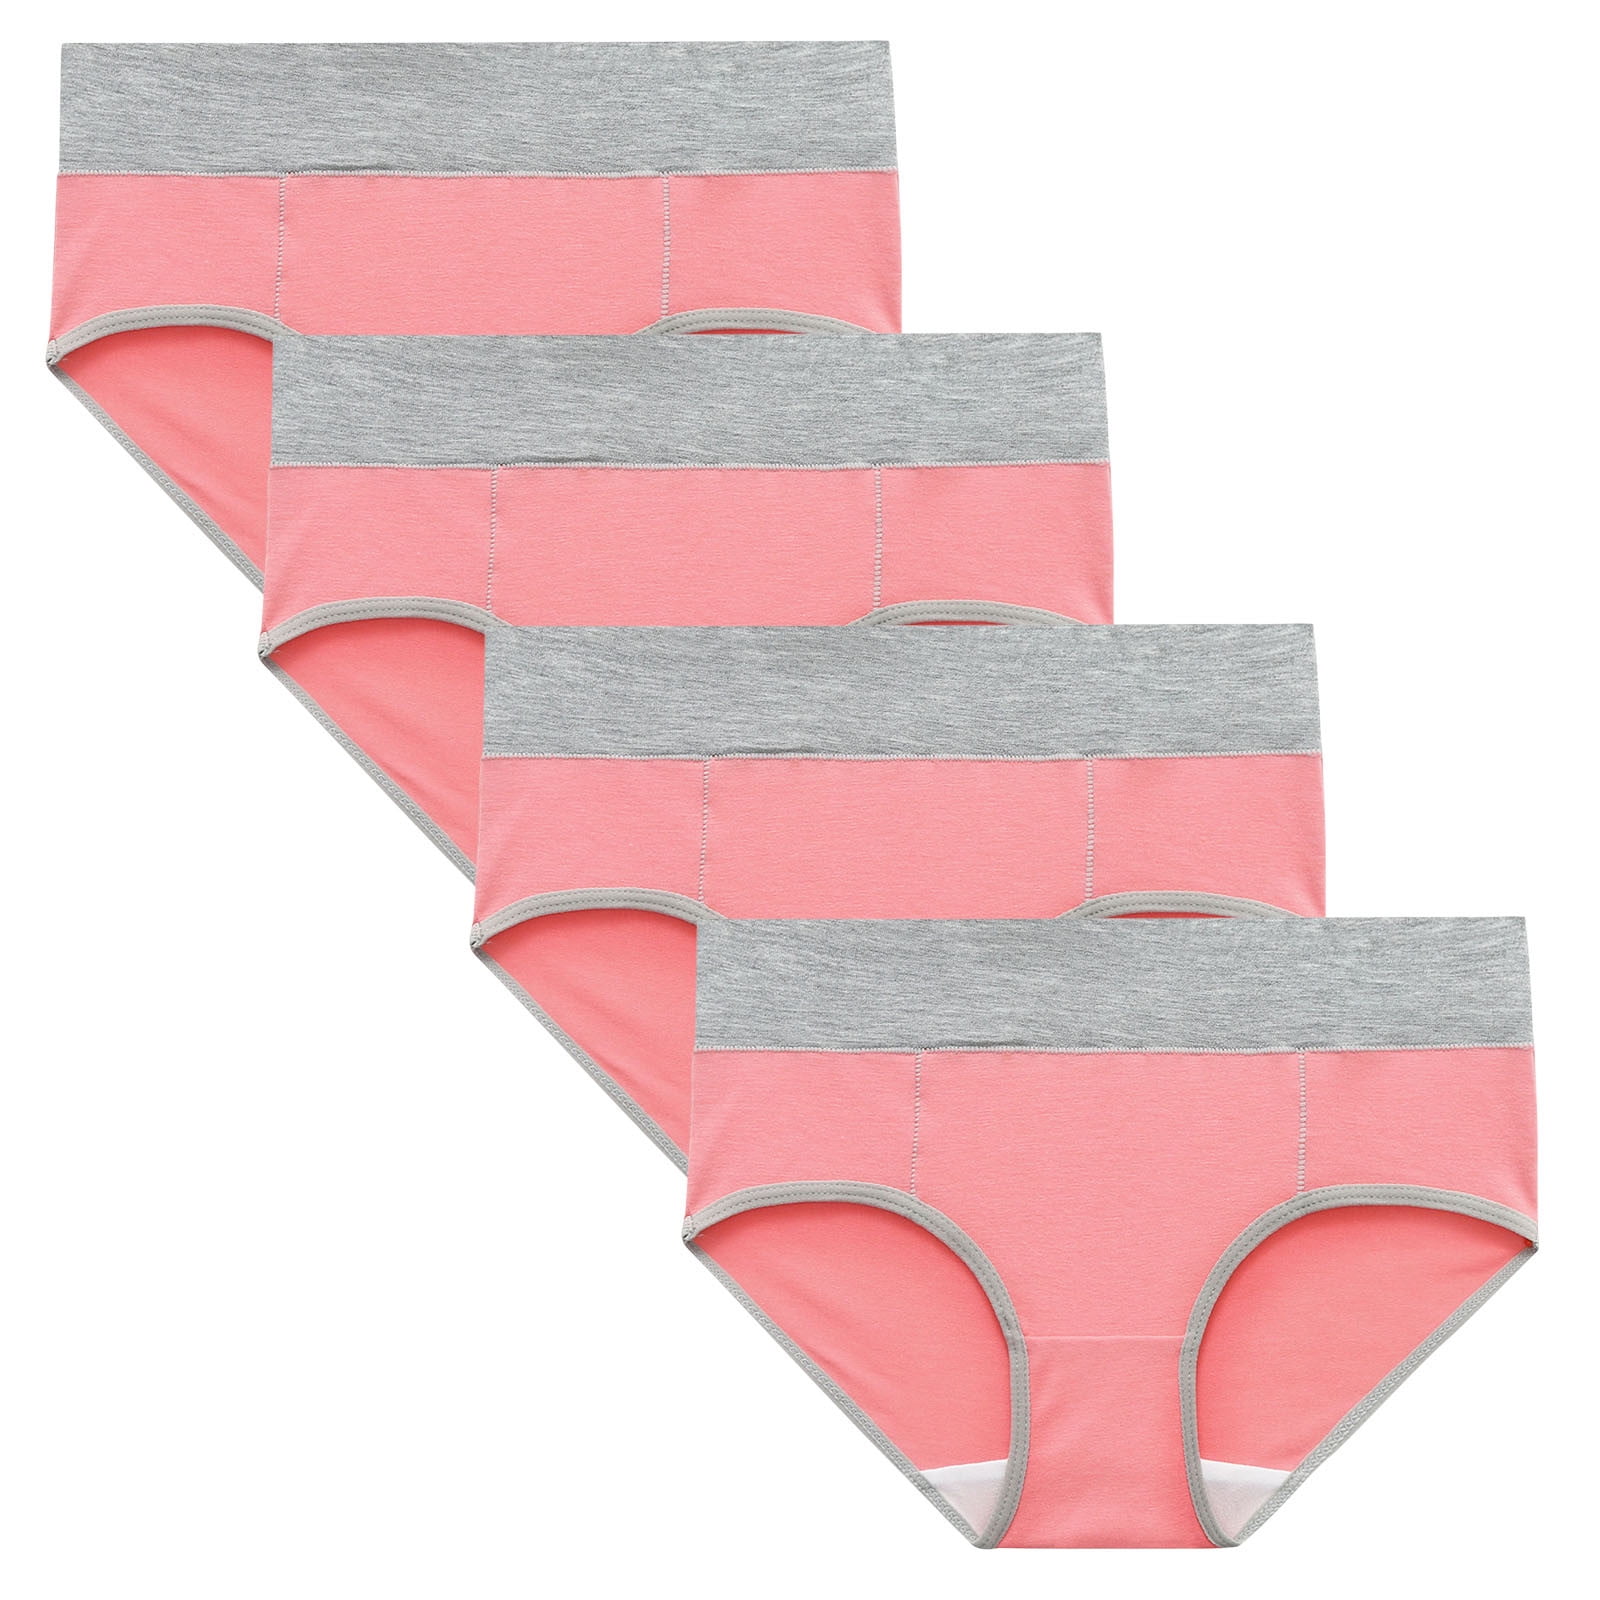 Mrat Seamless Underwear Cotton Panty Soft Breathable Women Solid